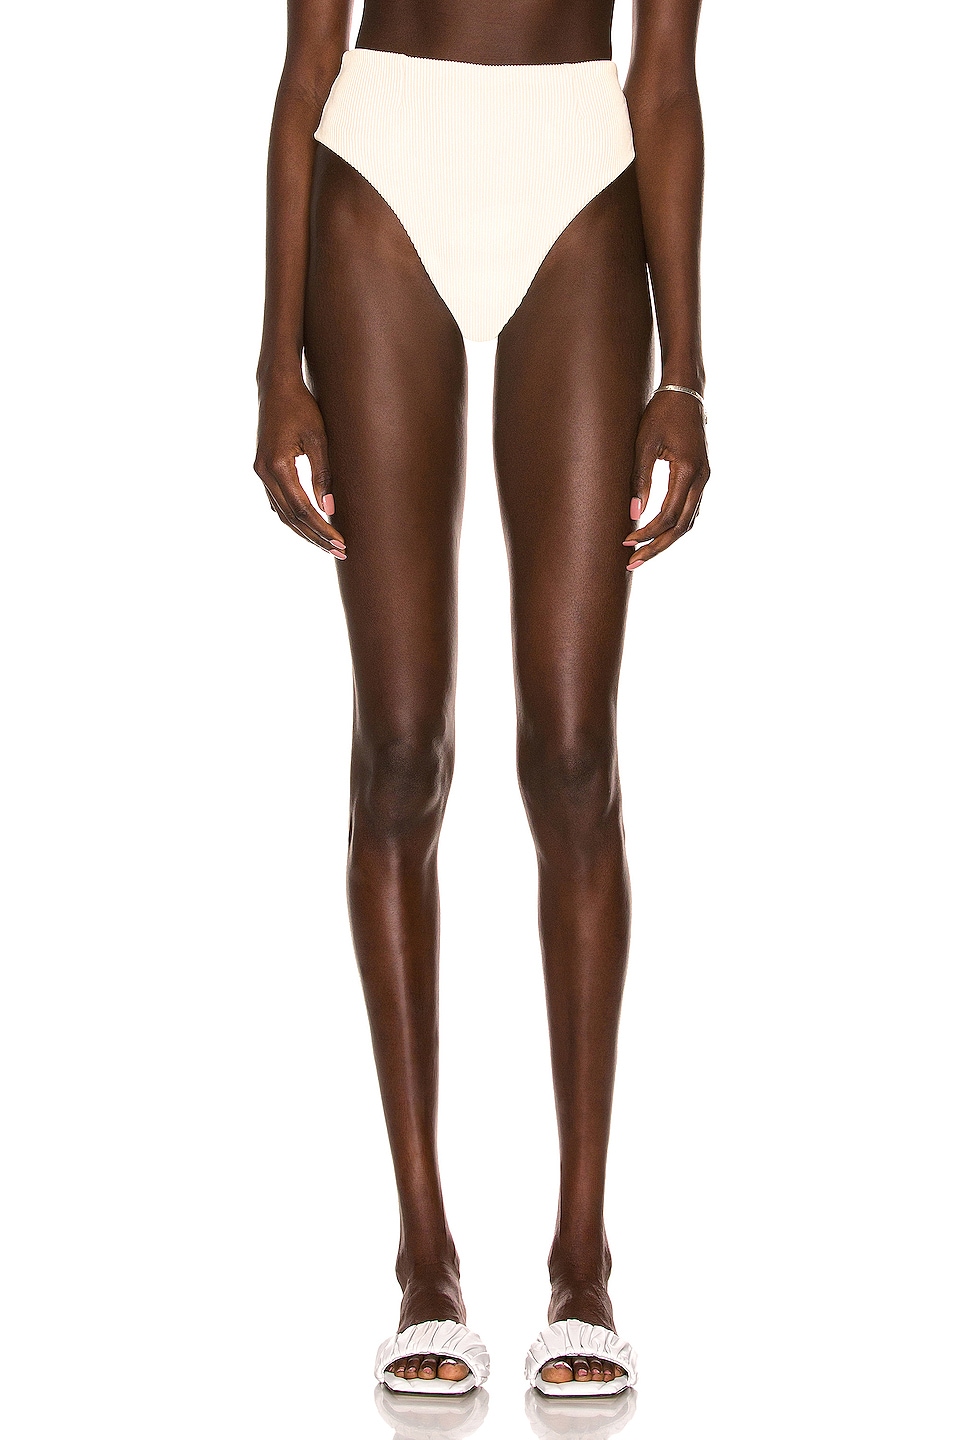 Image 1 of HAIGHT. Ribbed Highleg Hotpants Bikini Bottom in White Clay